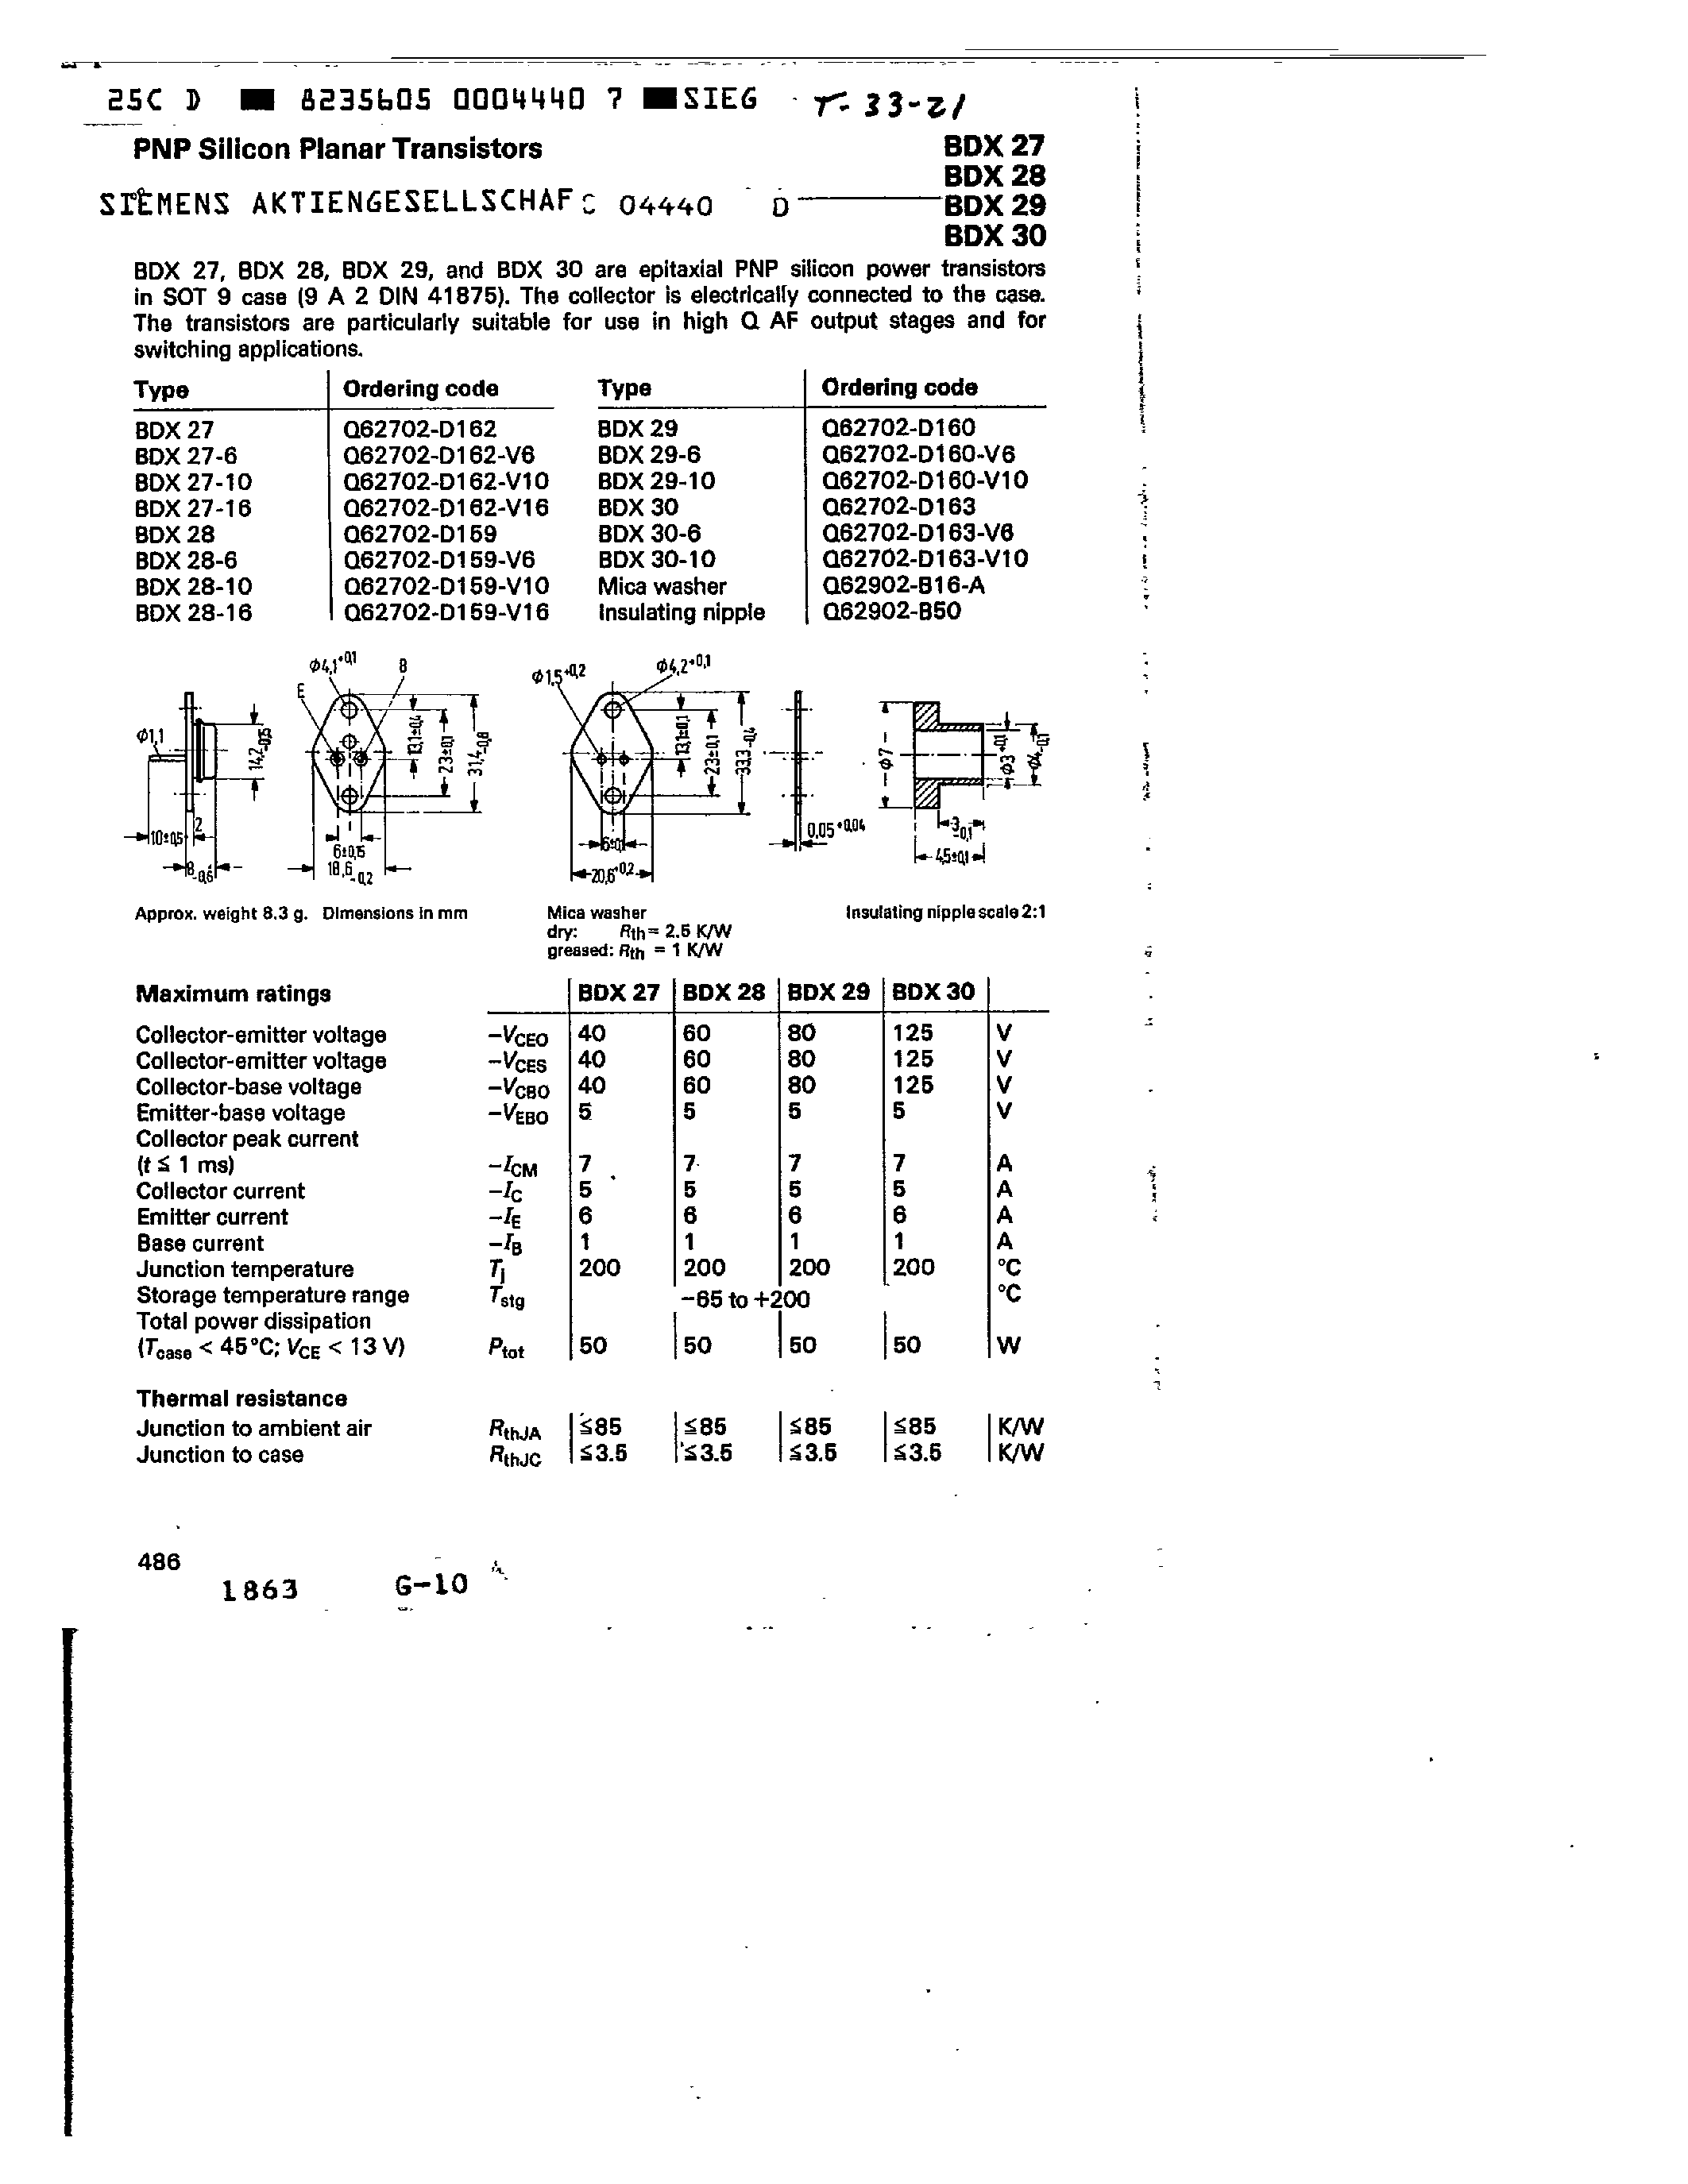 Datasheet BDX29 - PNP SILICON PLANAR TRANSISTORS page 1